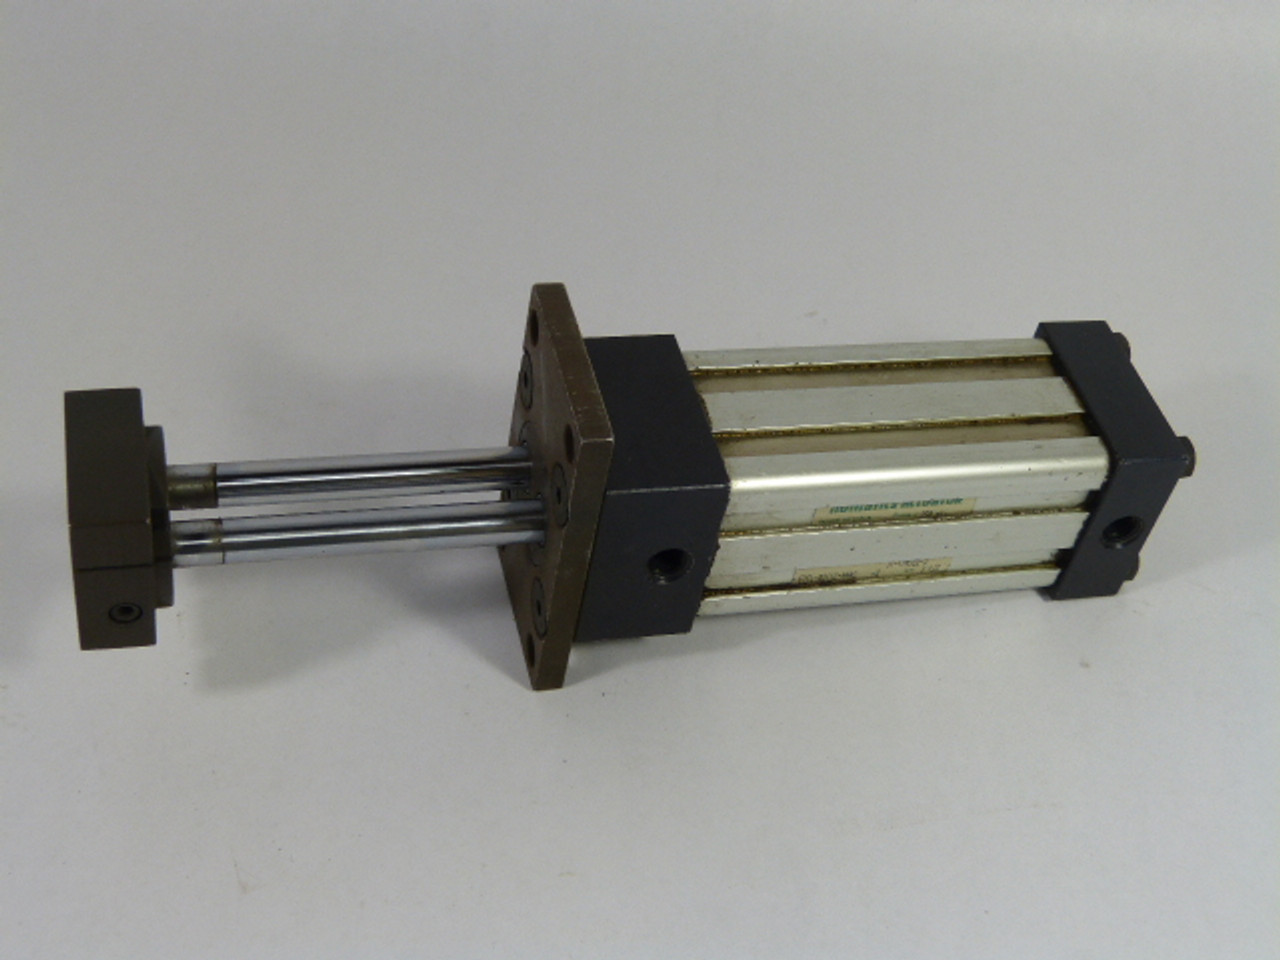 Numatics F1FL-03I1C-AAA2 Pneumatic Actuator Cylinder USED